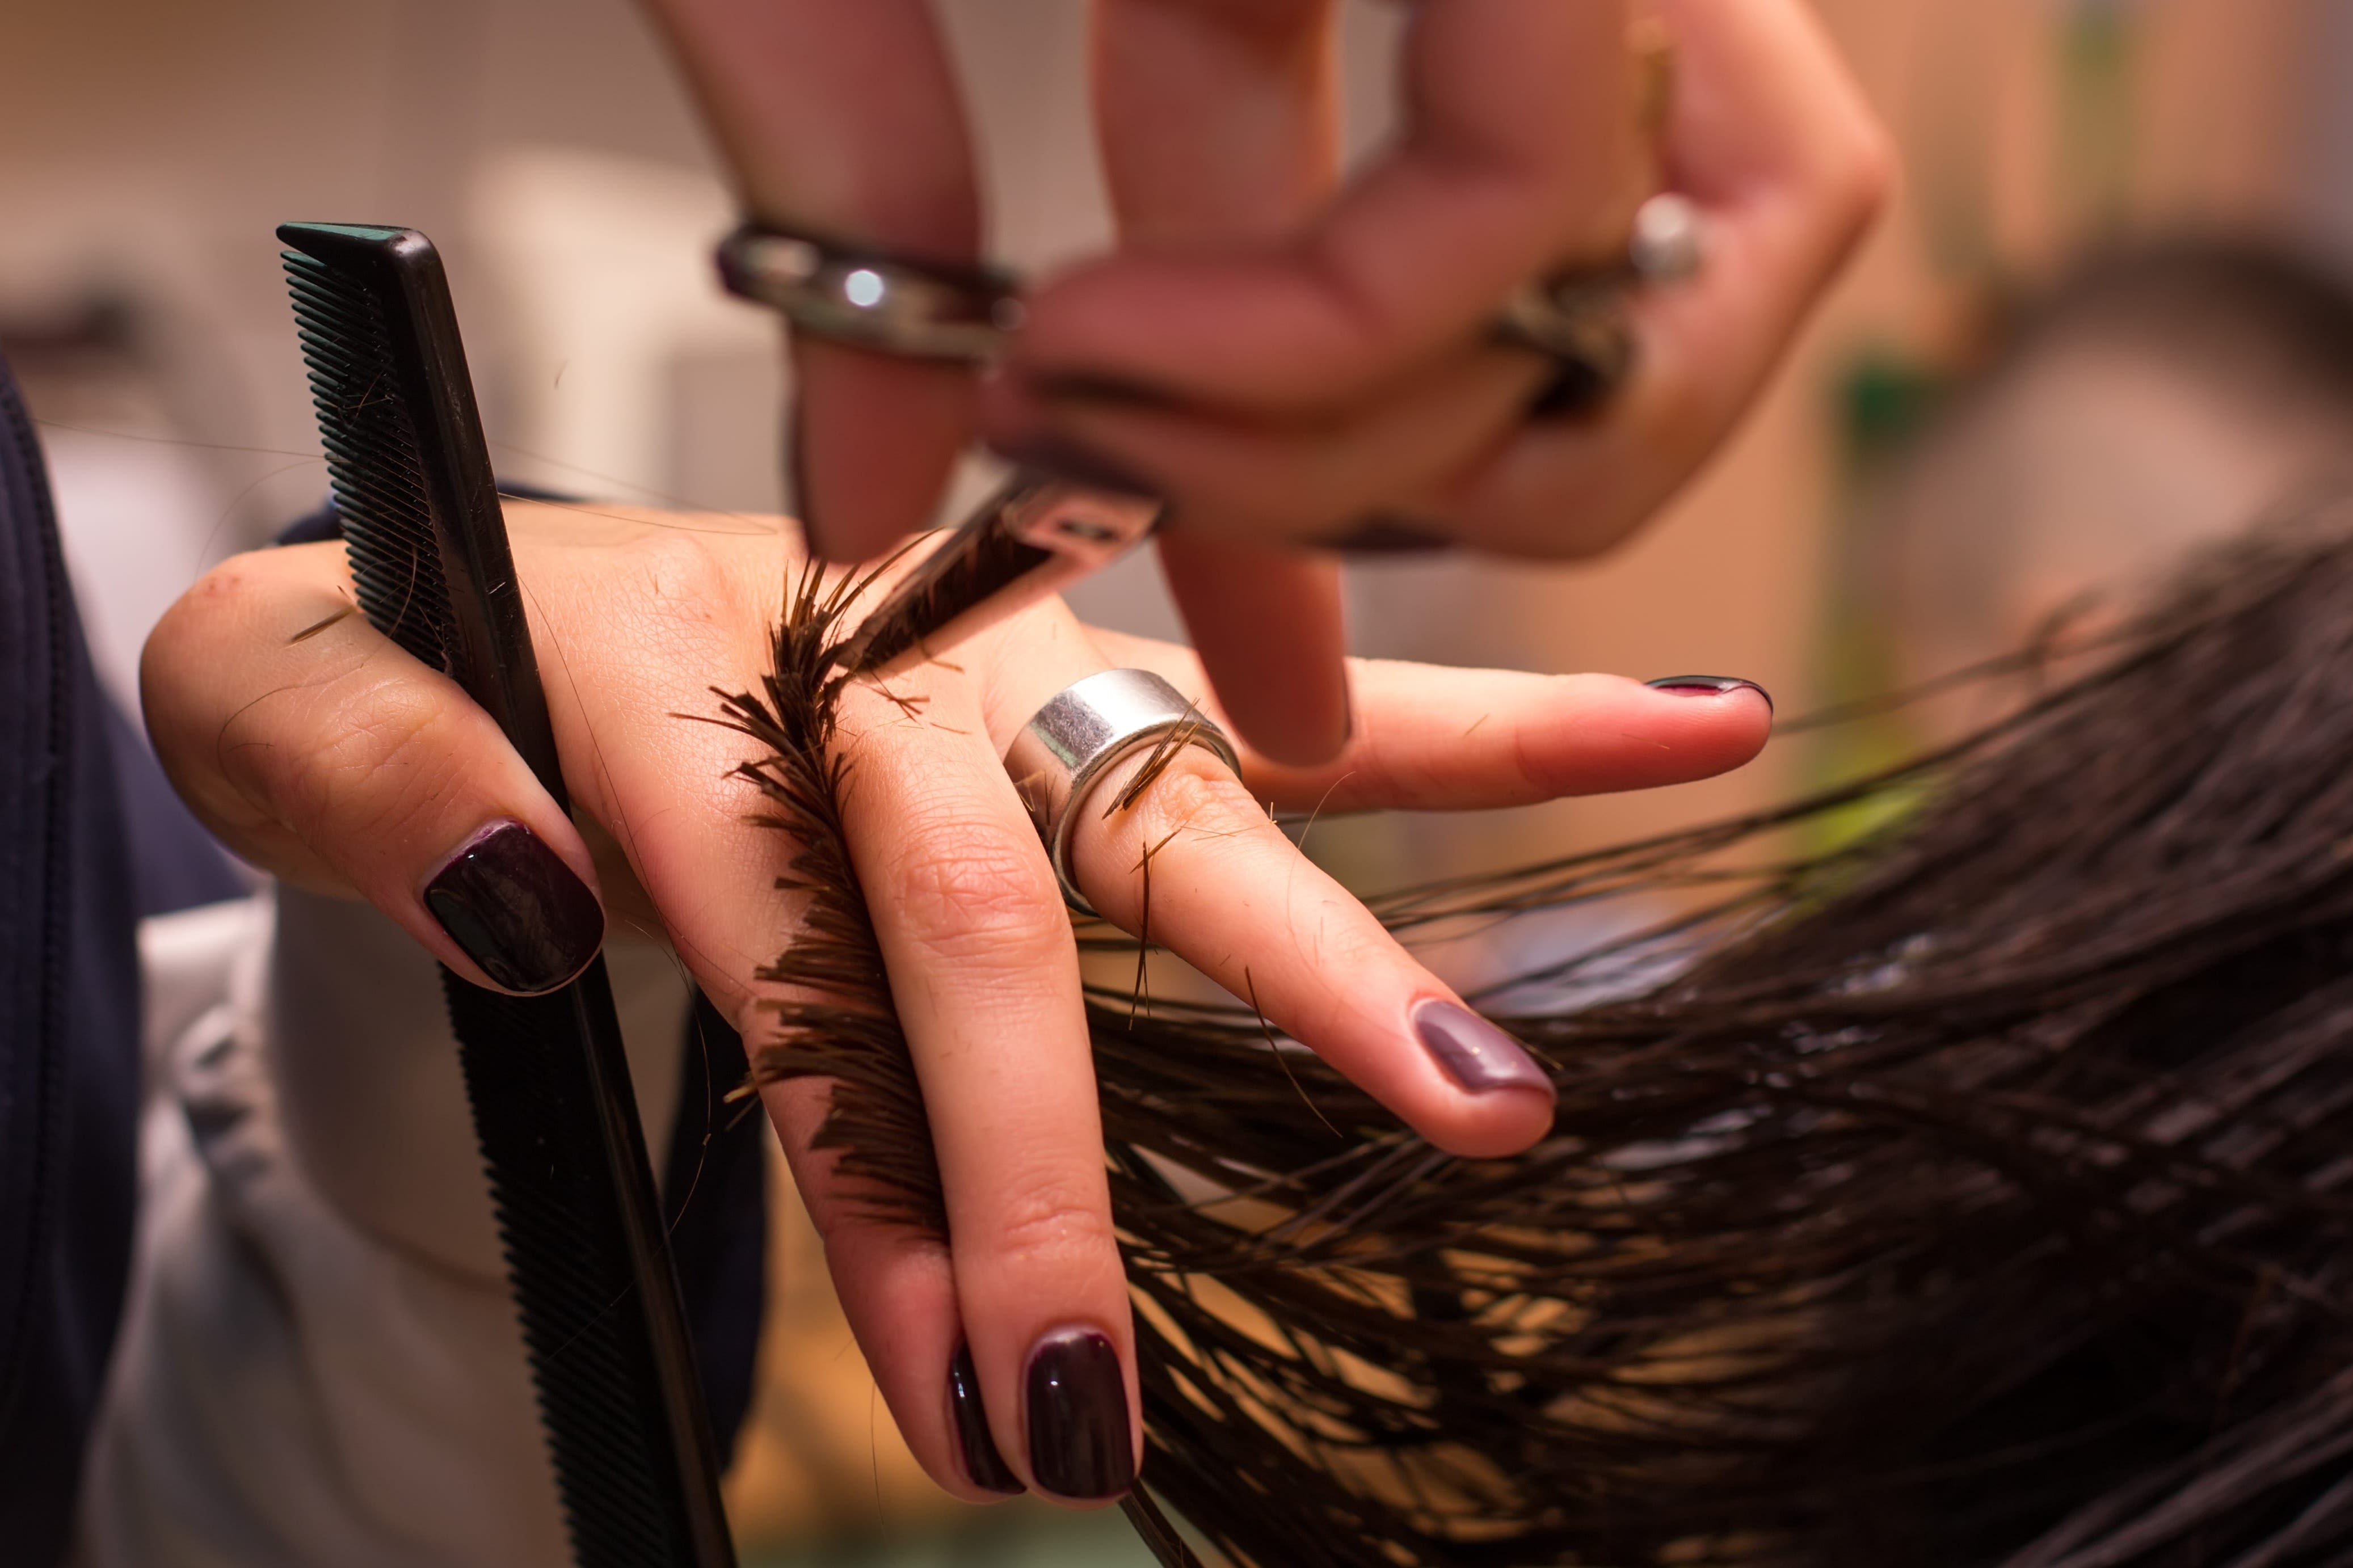 Magic Touch Hair Salon: Read Reviews and Book Classes on ClassPass